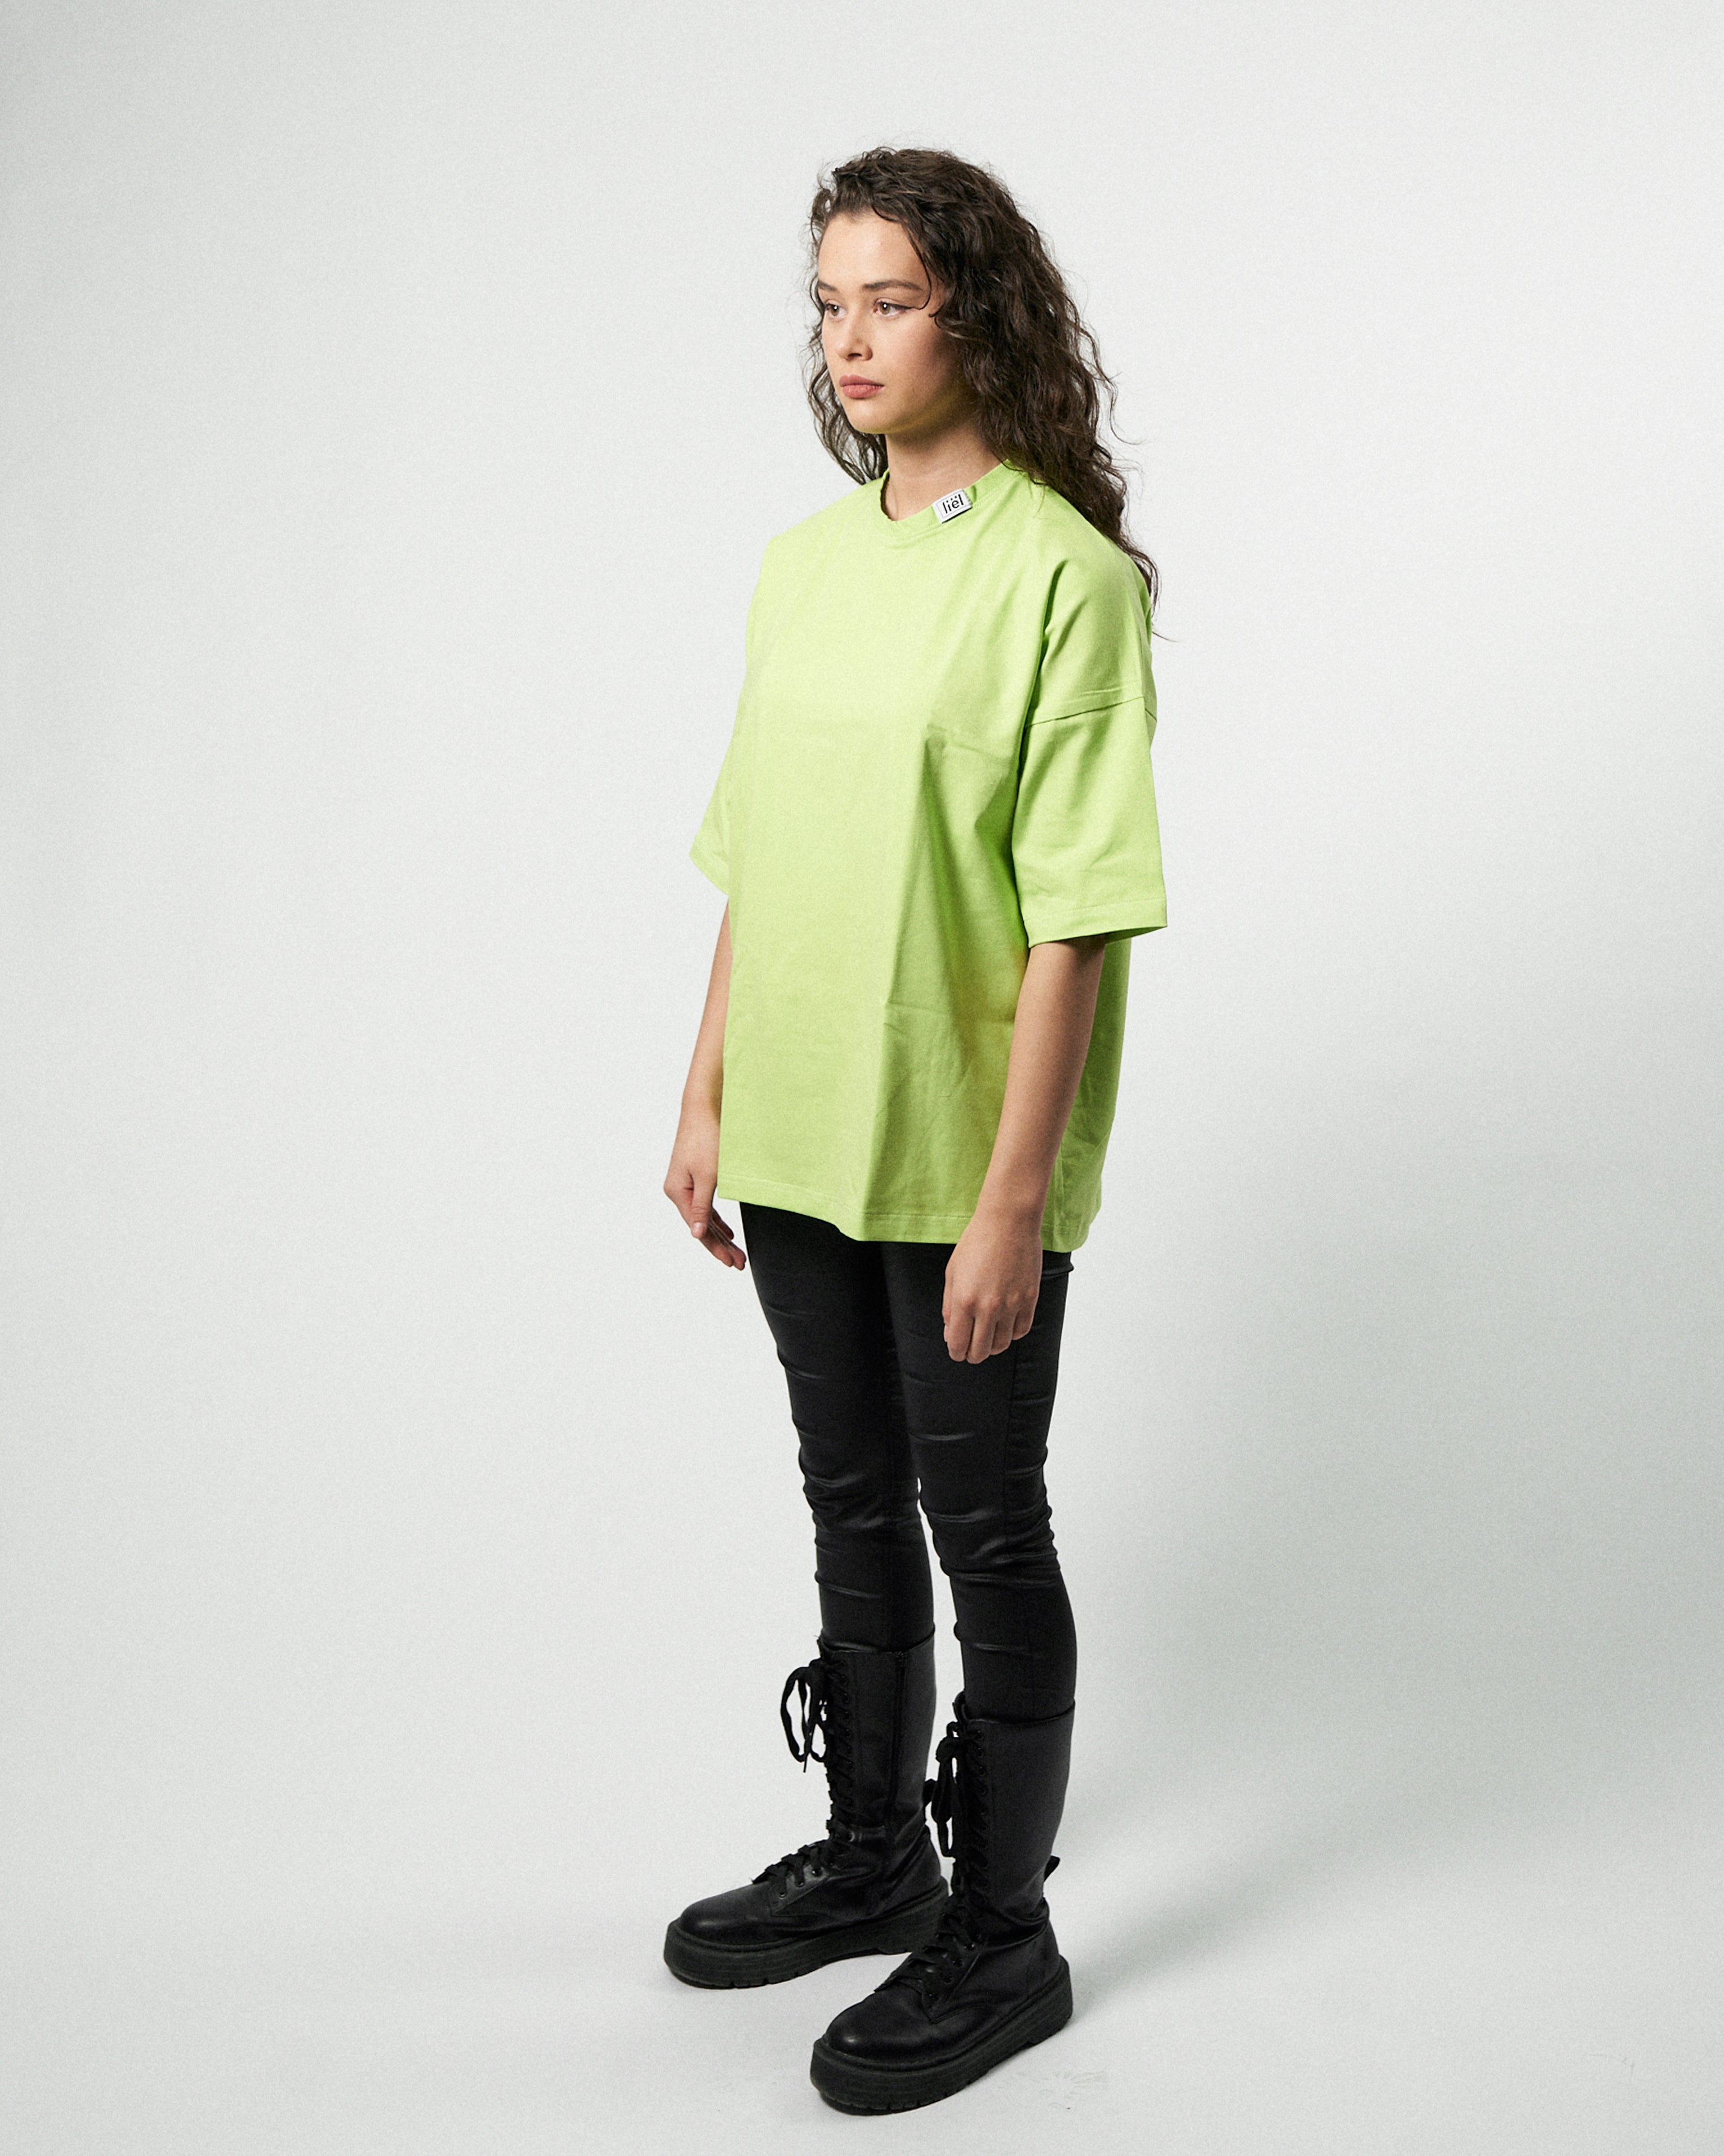 Oversized Shirt Women - Lime